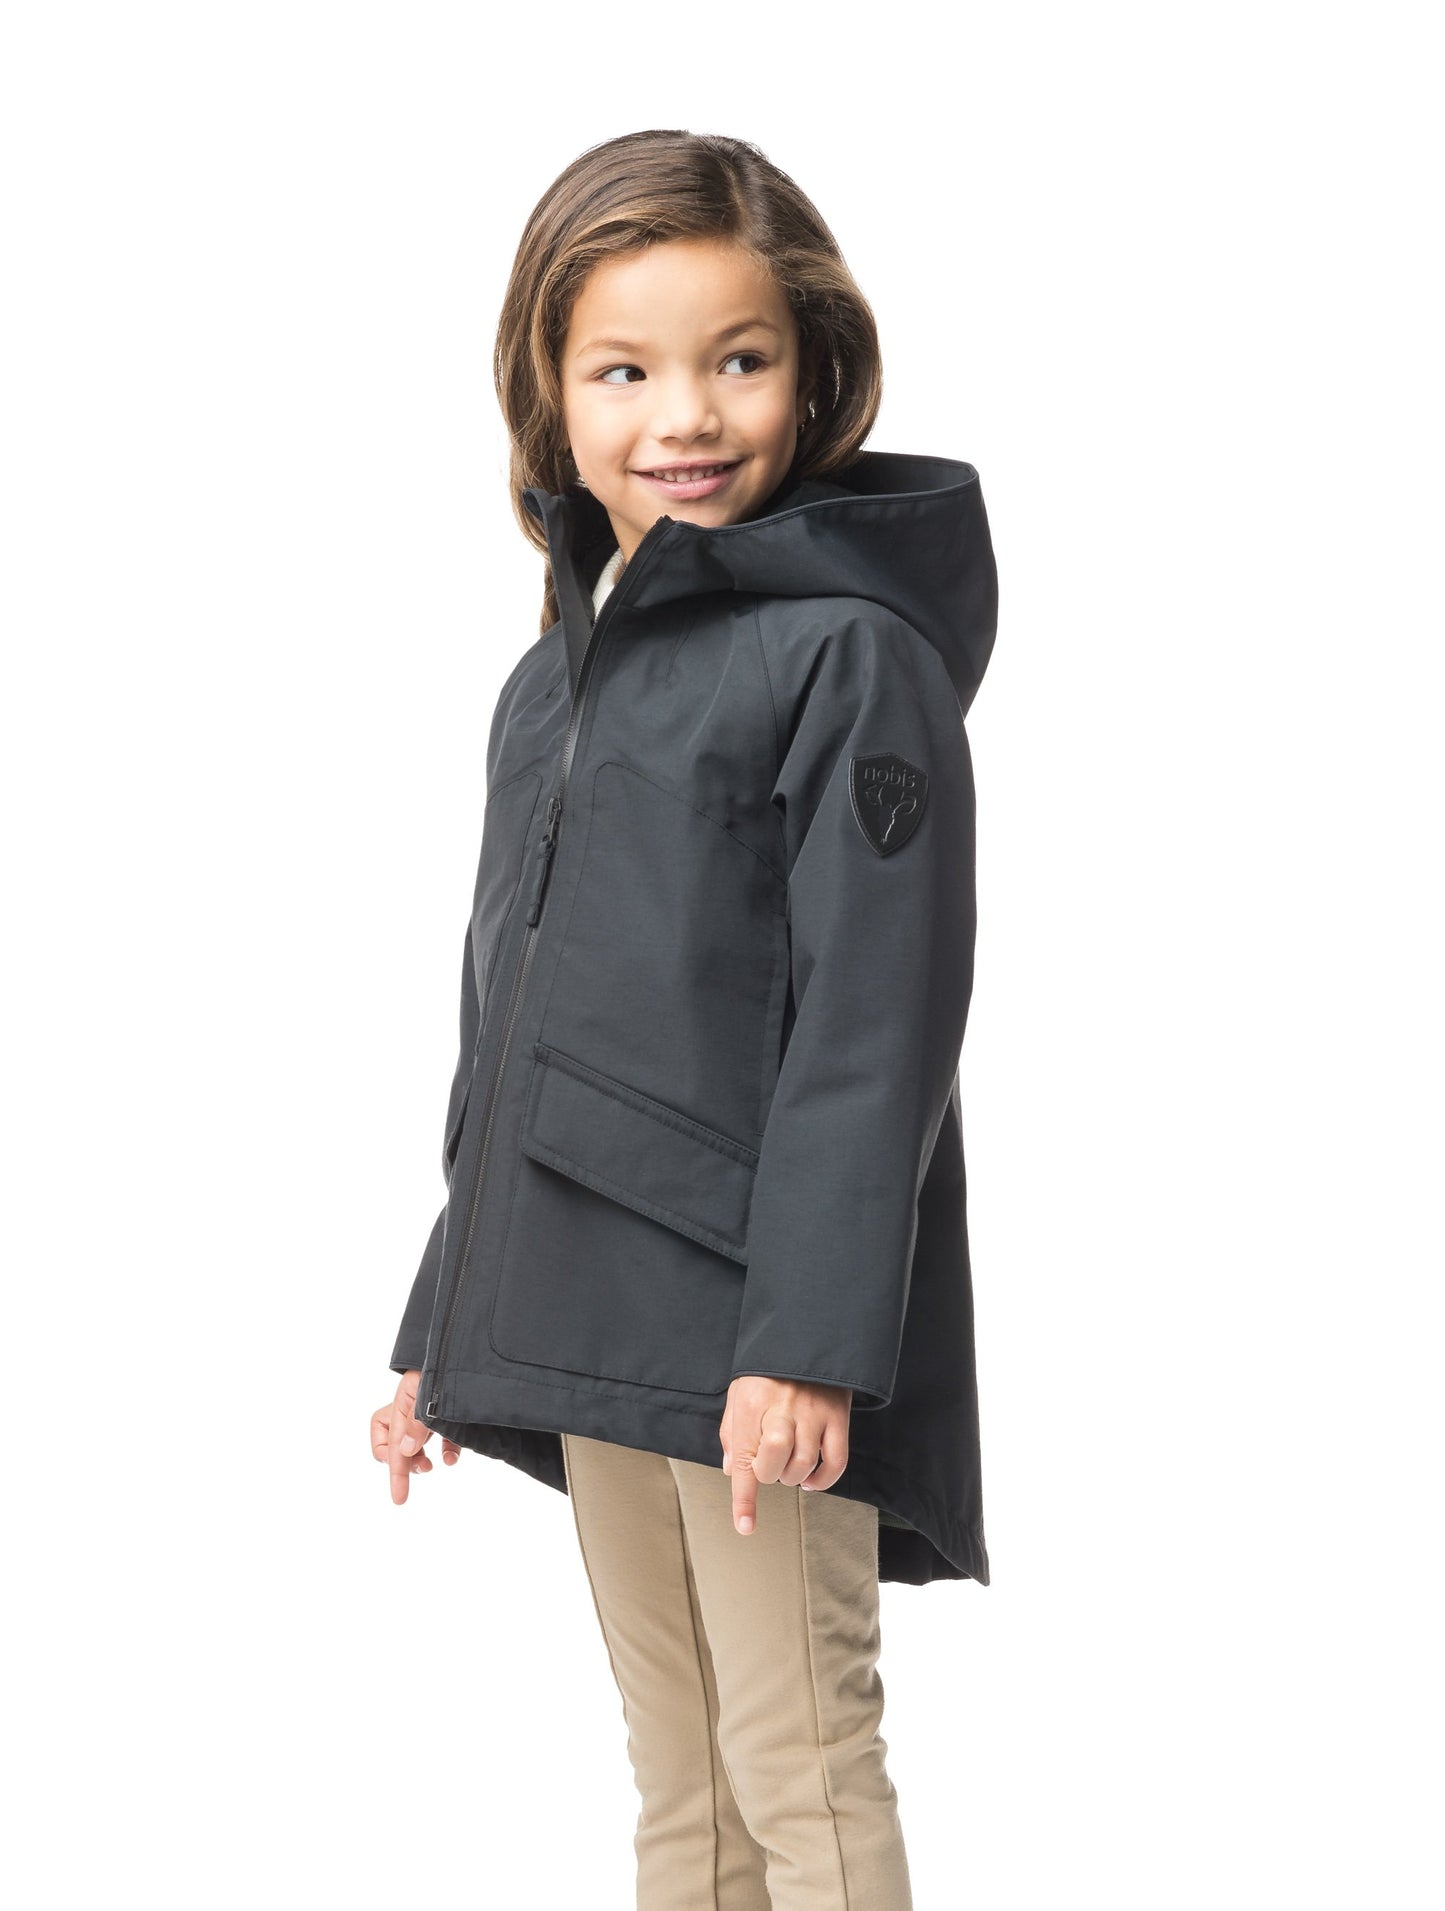 Kid's hip length fishtail rain jacket with hood in Black